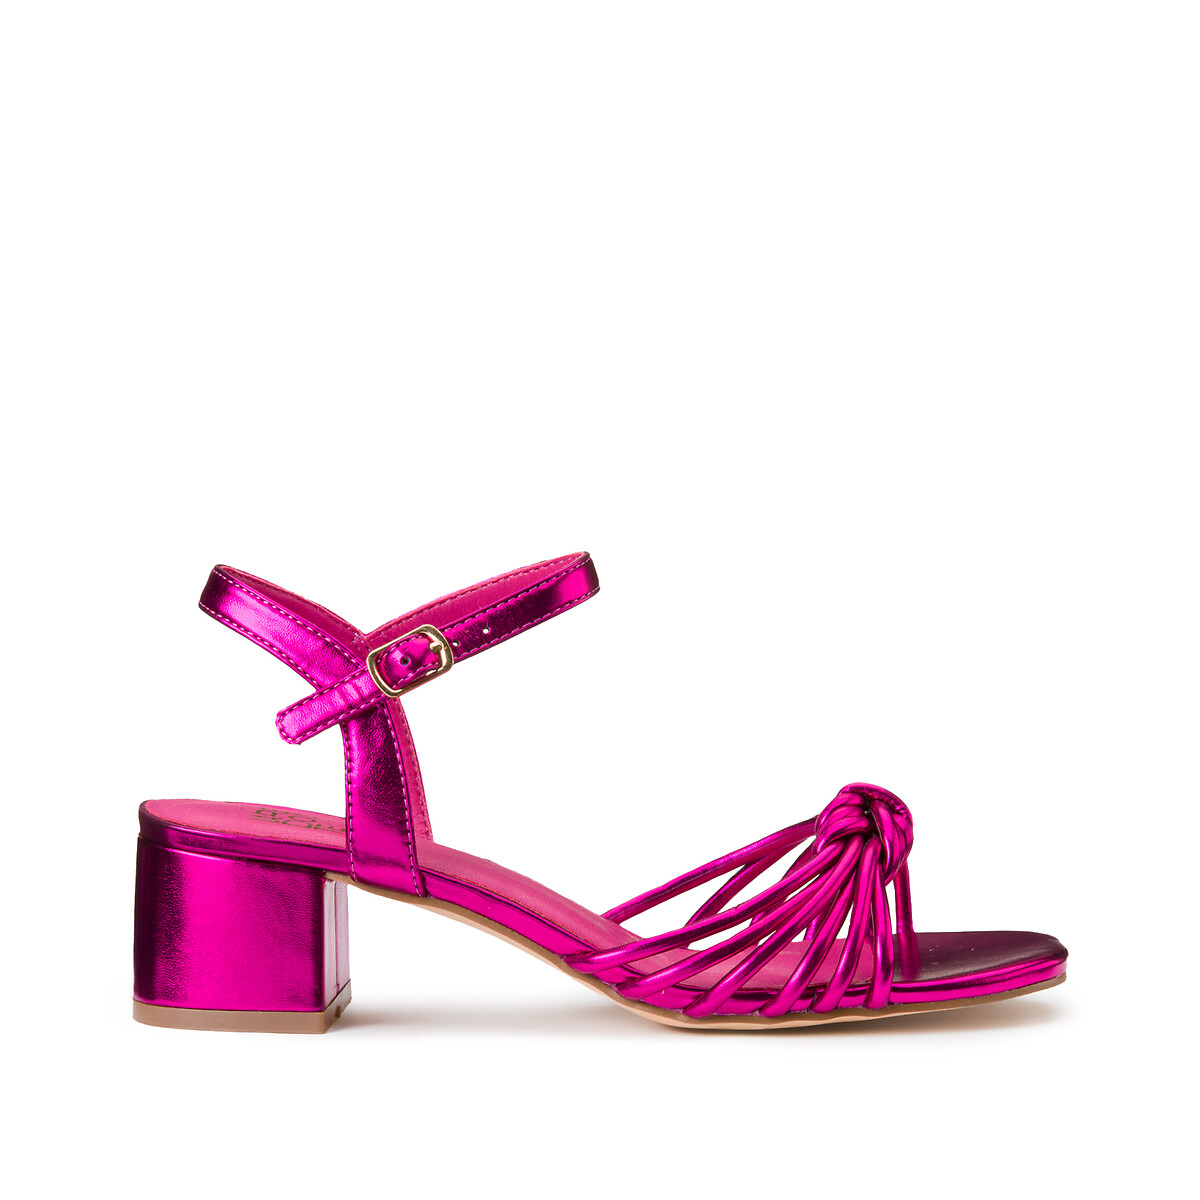 Босоножки на каблуке с металлическим отливом и тонкими ремешками 41 розовый